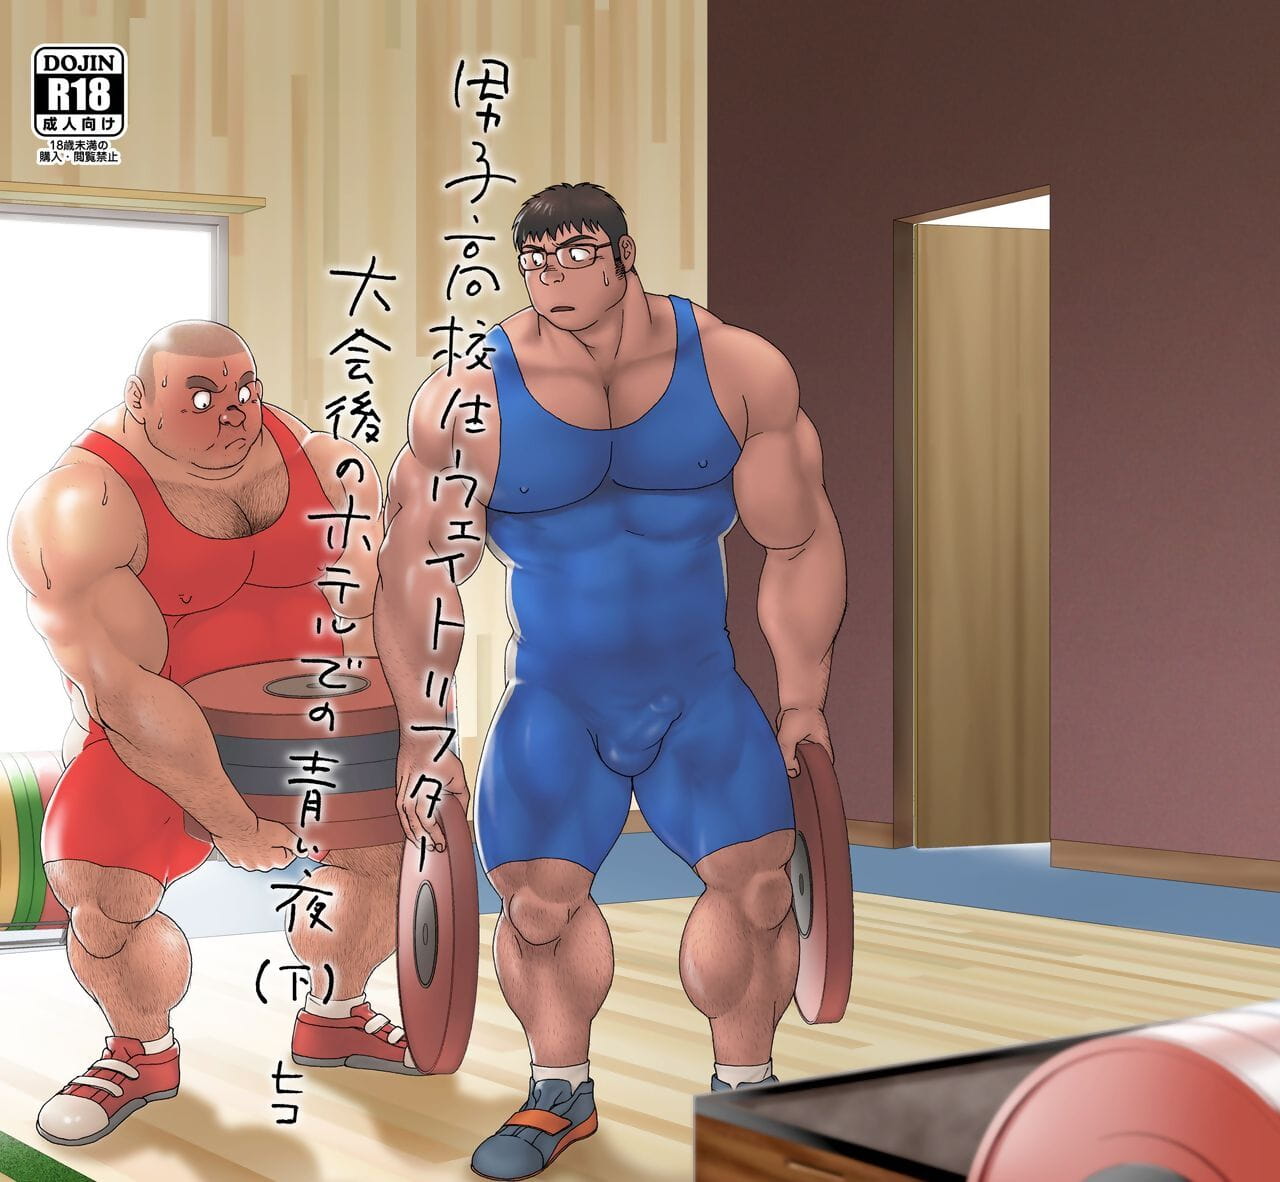 danshi koukousei weightlifter ไท่ไค อไป ไม่ โรงแรม De ไม่ Aoi yoru page 1